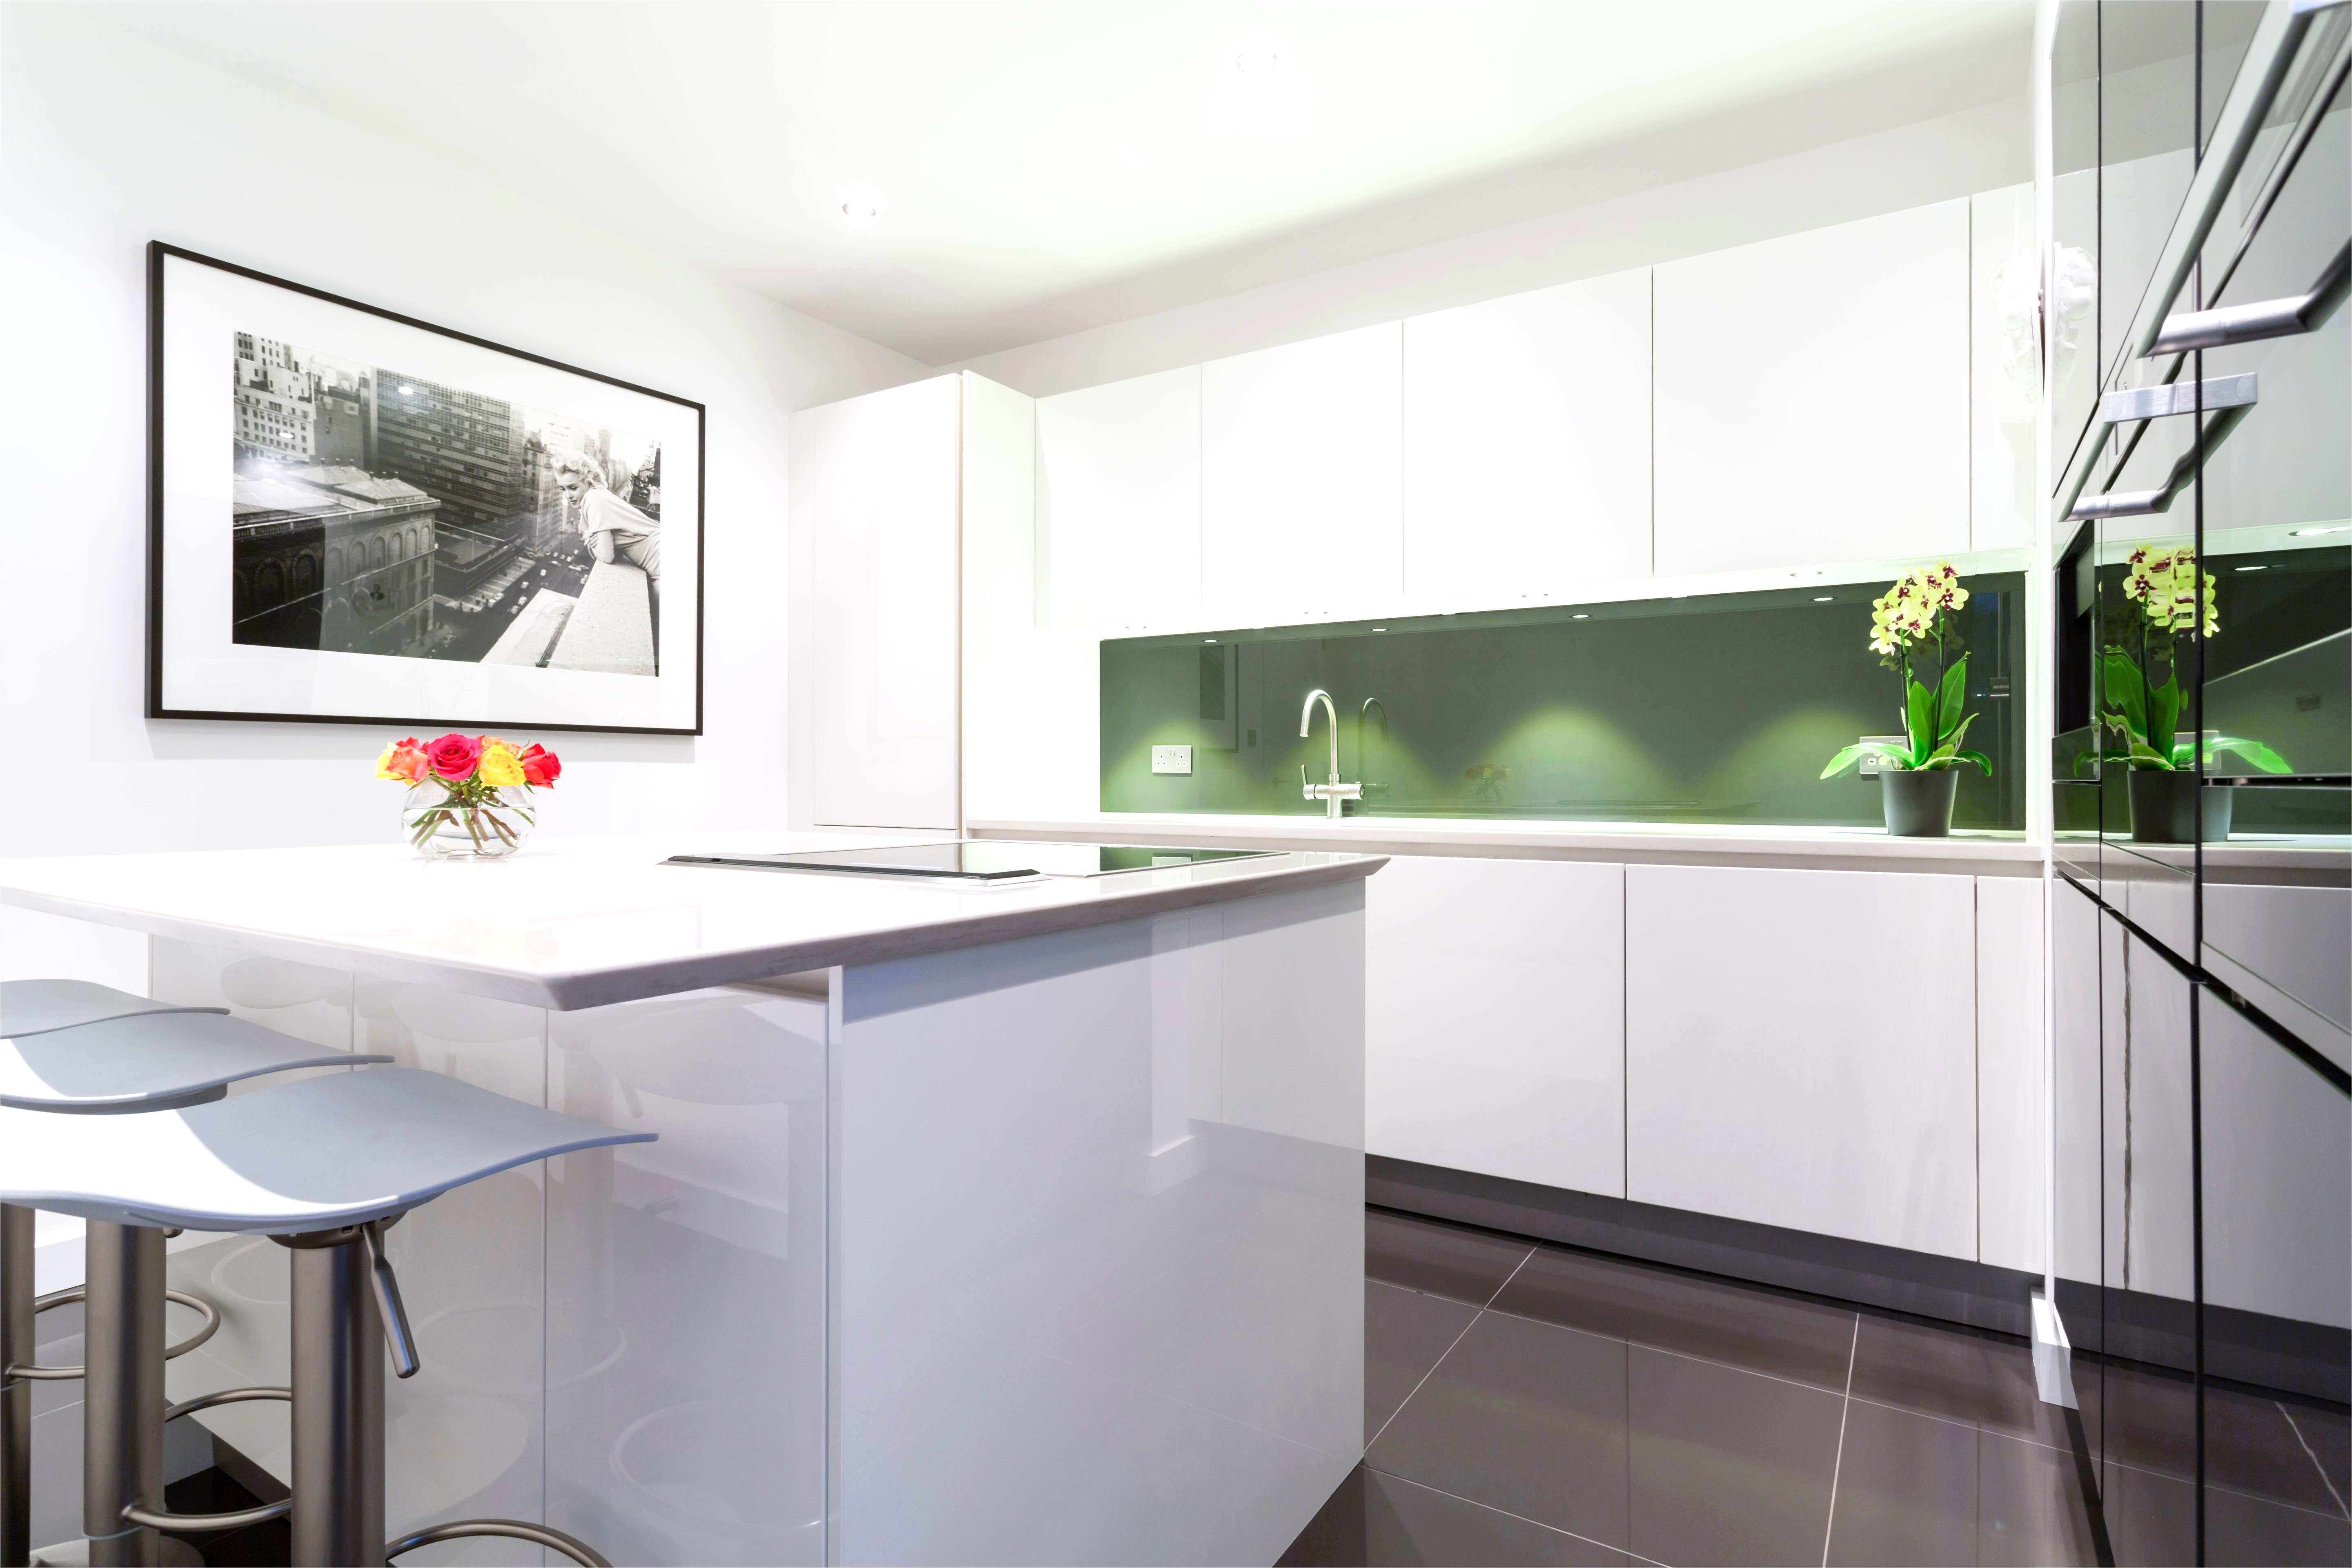 lowes kitchen designer elegant kitchen island designs new slbss8h sink dishwasher bo 1958i 0d the